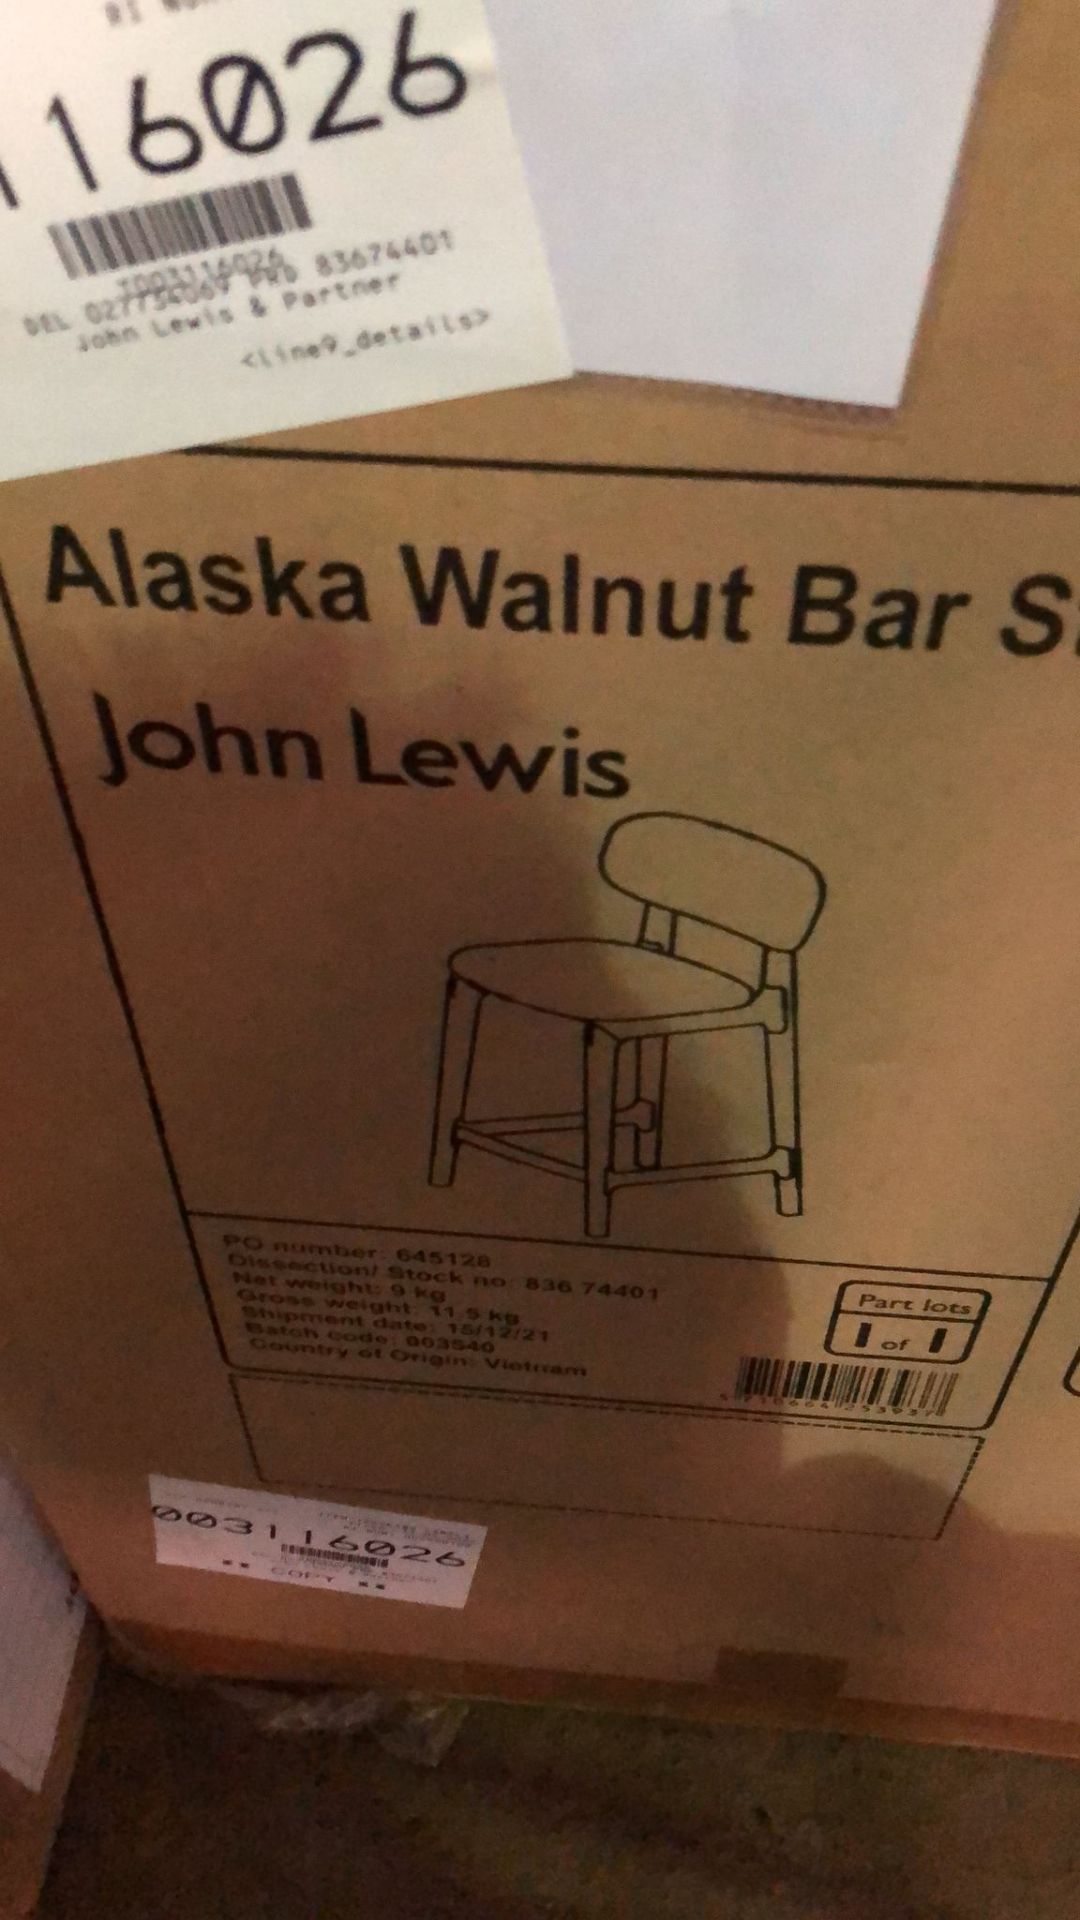 John Lewis Alaska Faux Leather Bar Stool, Walnut - Stock Number - 83674401 - Retur... - Image 2 of 2